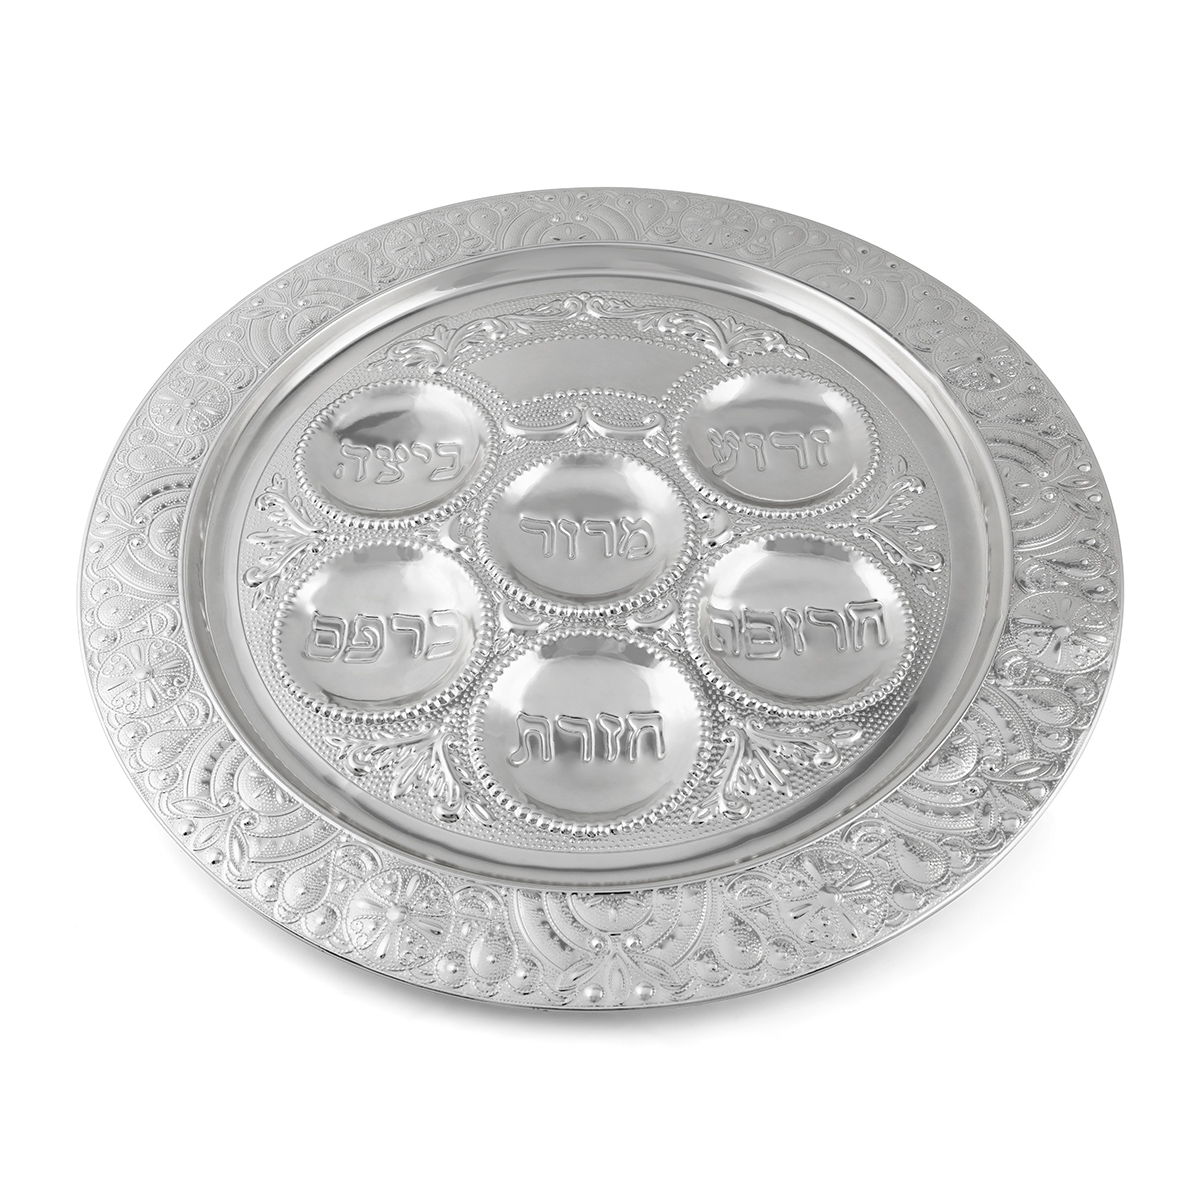 Nickel Seder Plate With Ornate Filigree Design - 1